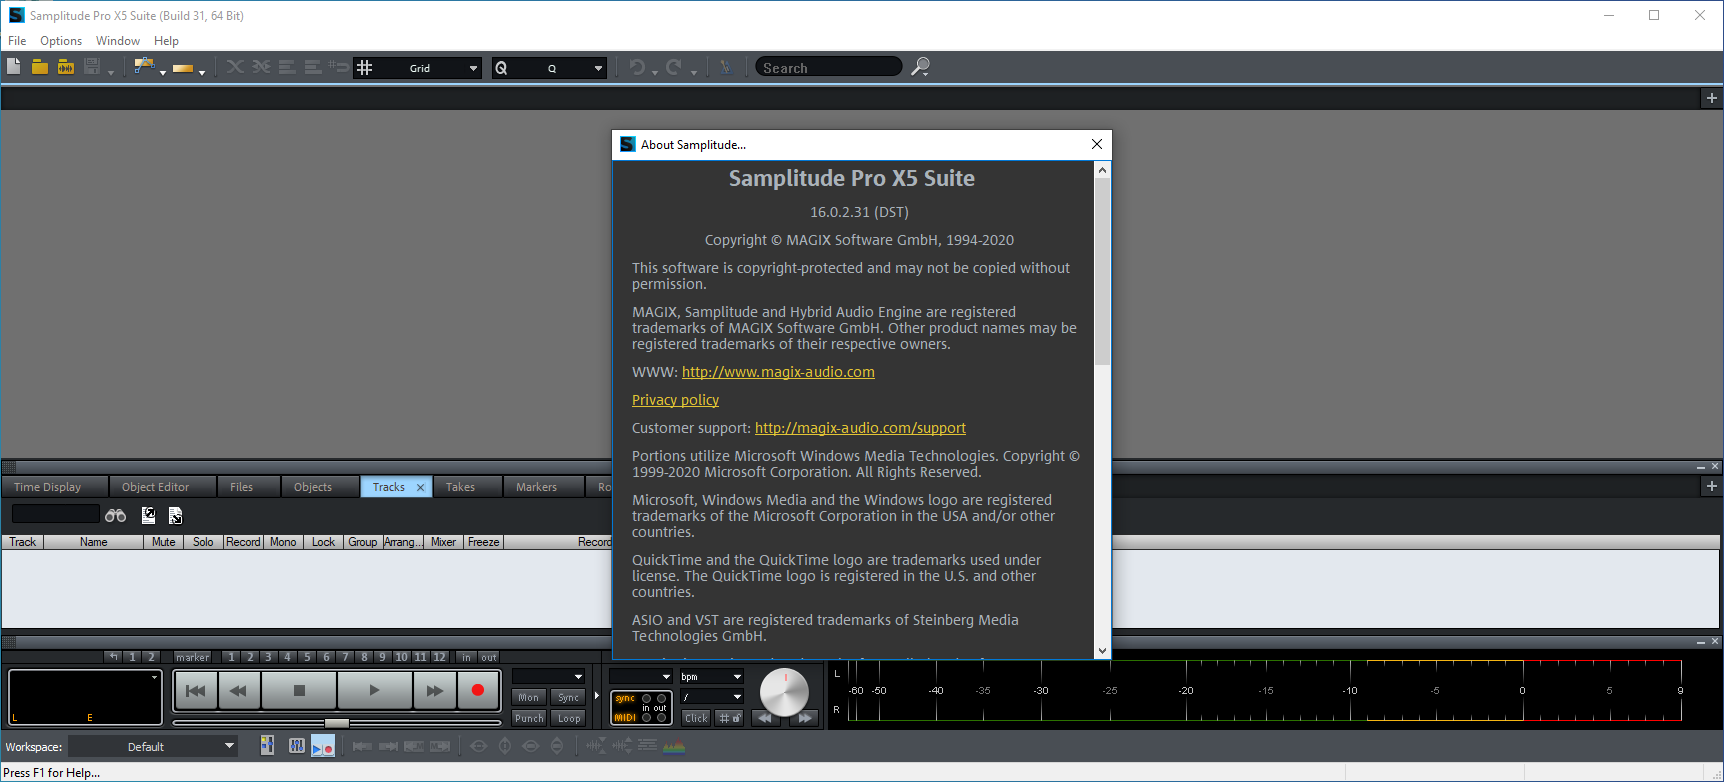 MAGIX Samplitude Pro X8 Suite 19.0.1.23115 instal the last version for windows